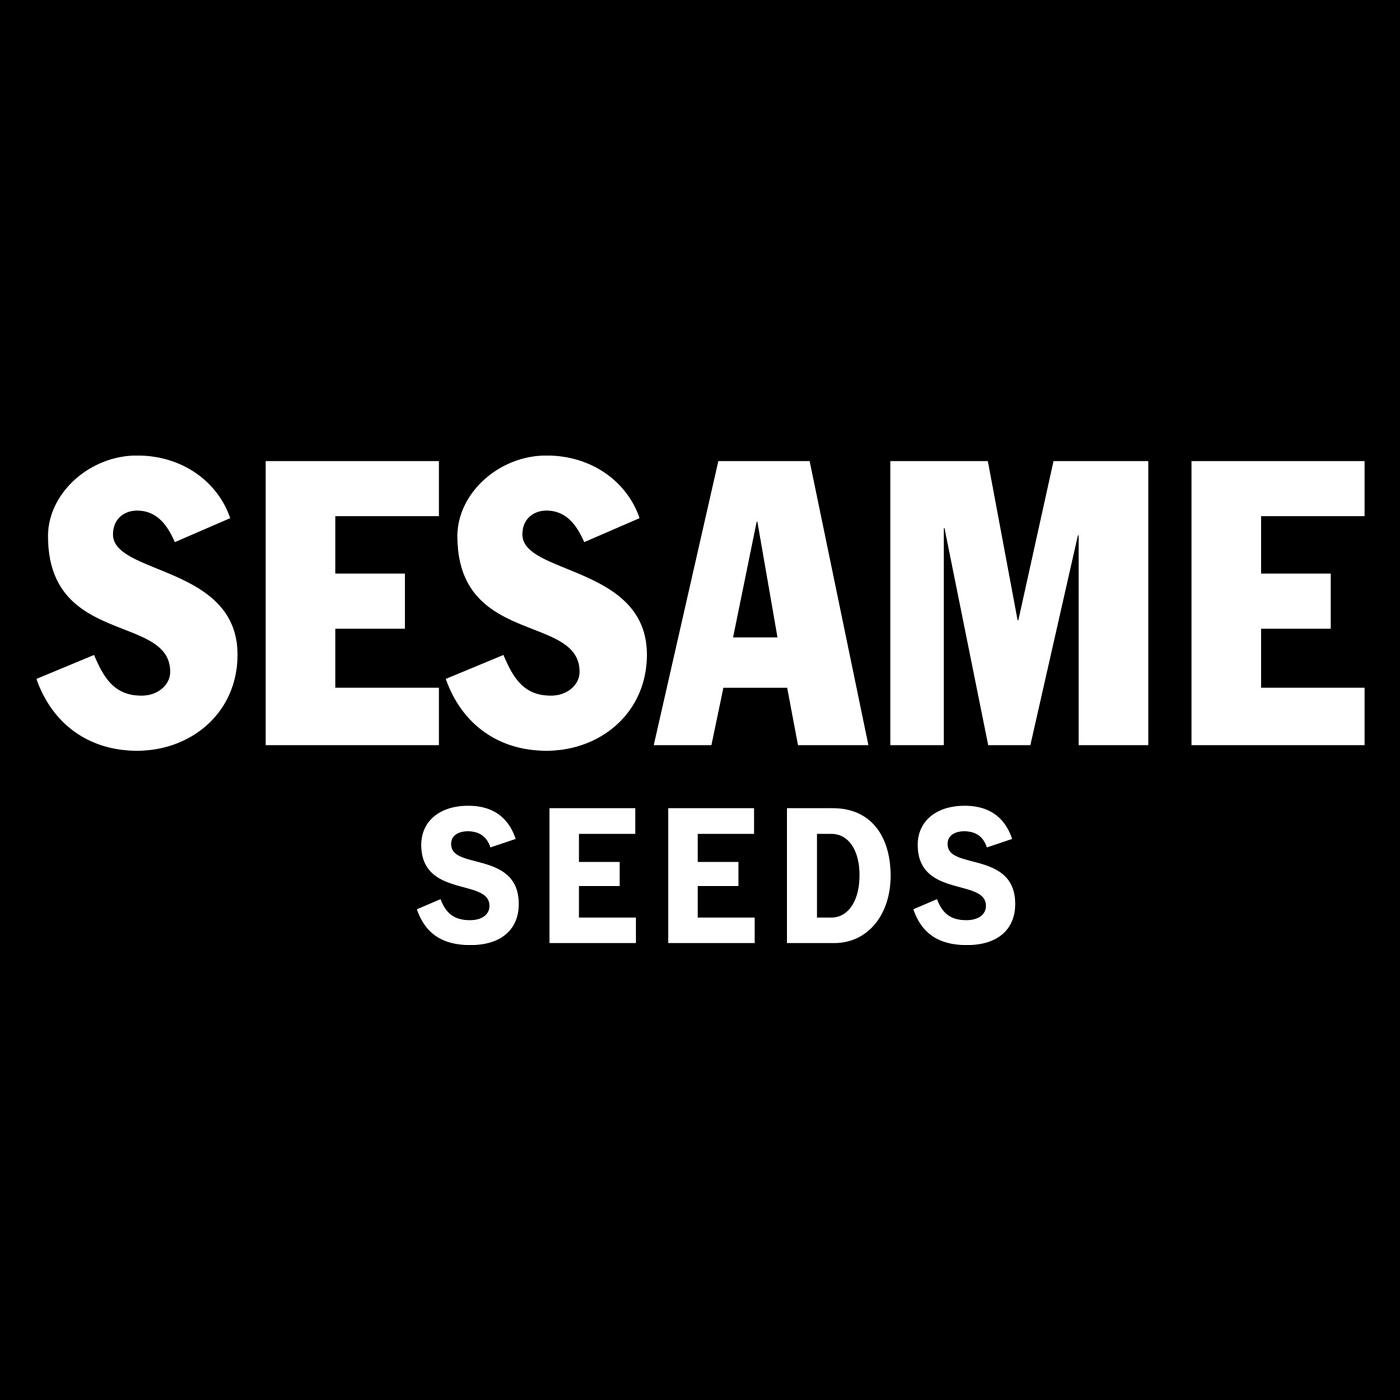 McCormick Sesame Seeds; image 7 of 8